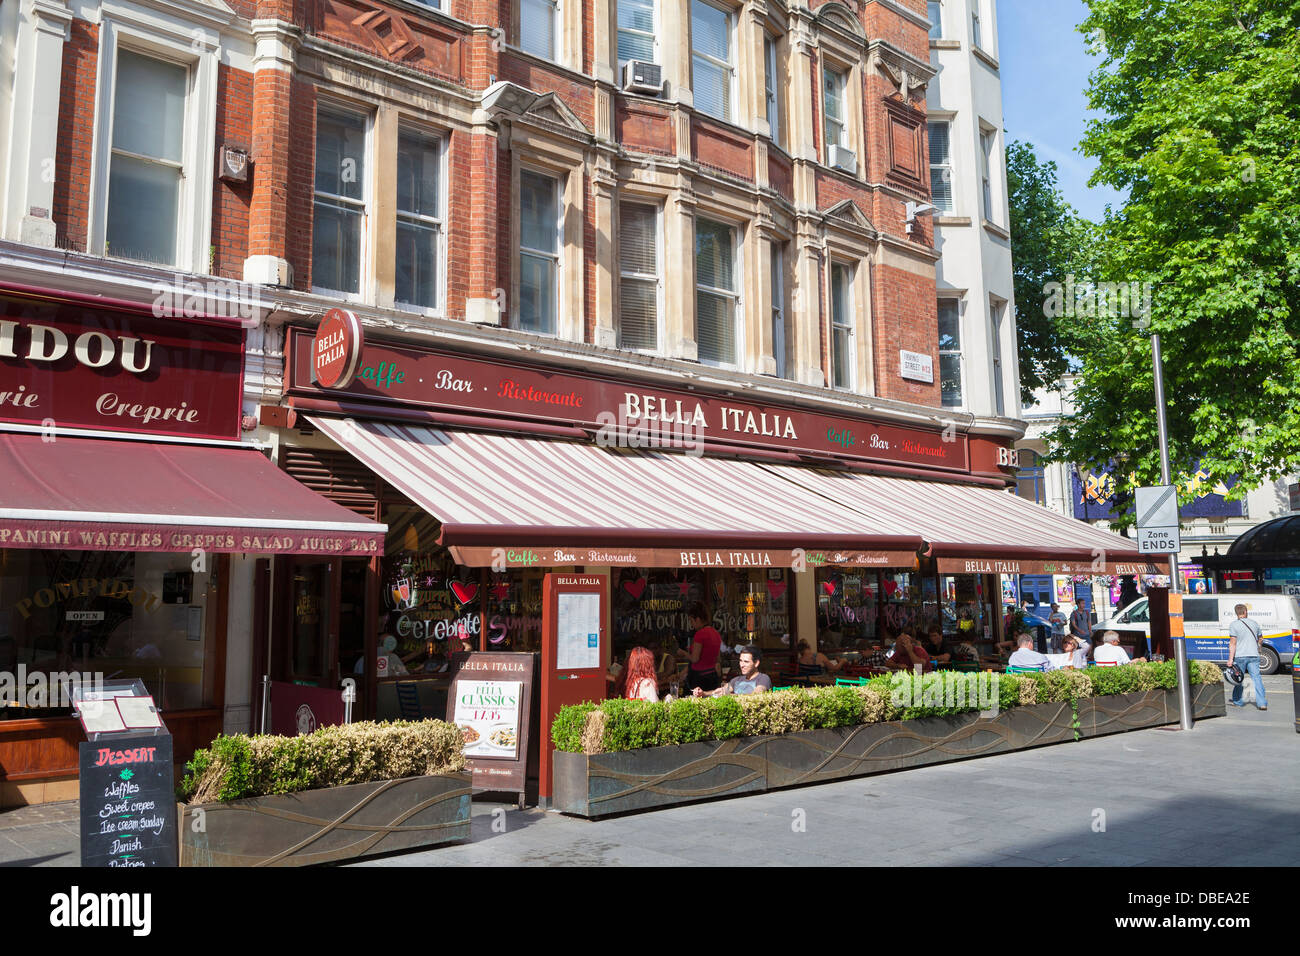 Bella italia restaurant, London, UK Stock Photo